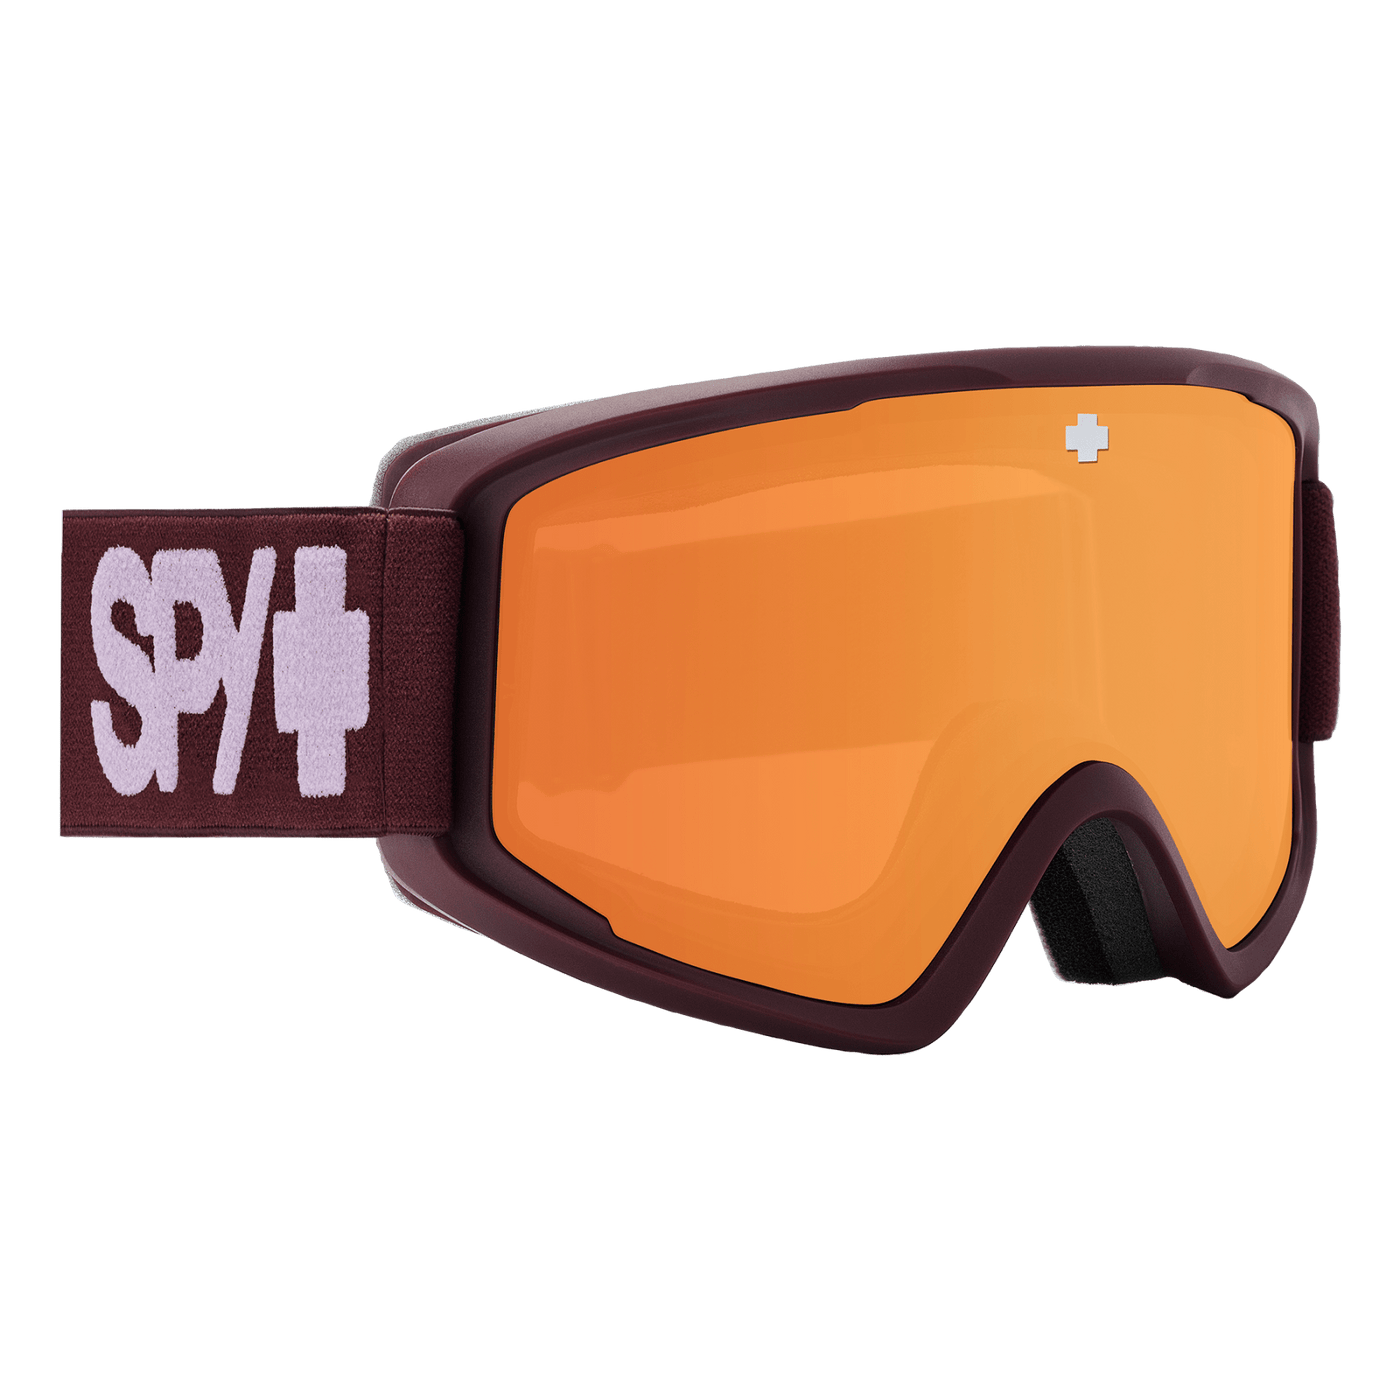 Spy optic youth snow goggles - Matte Merlot 